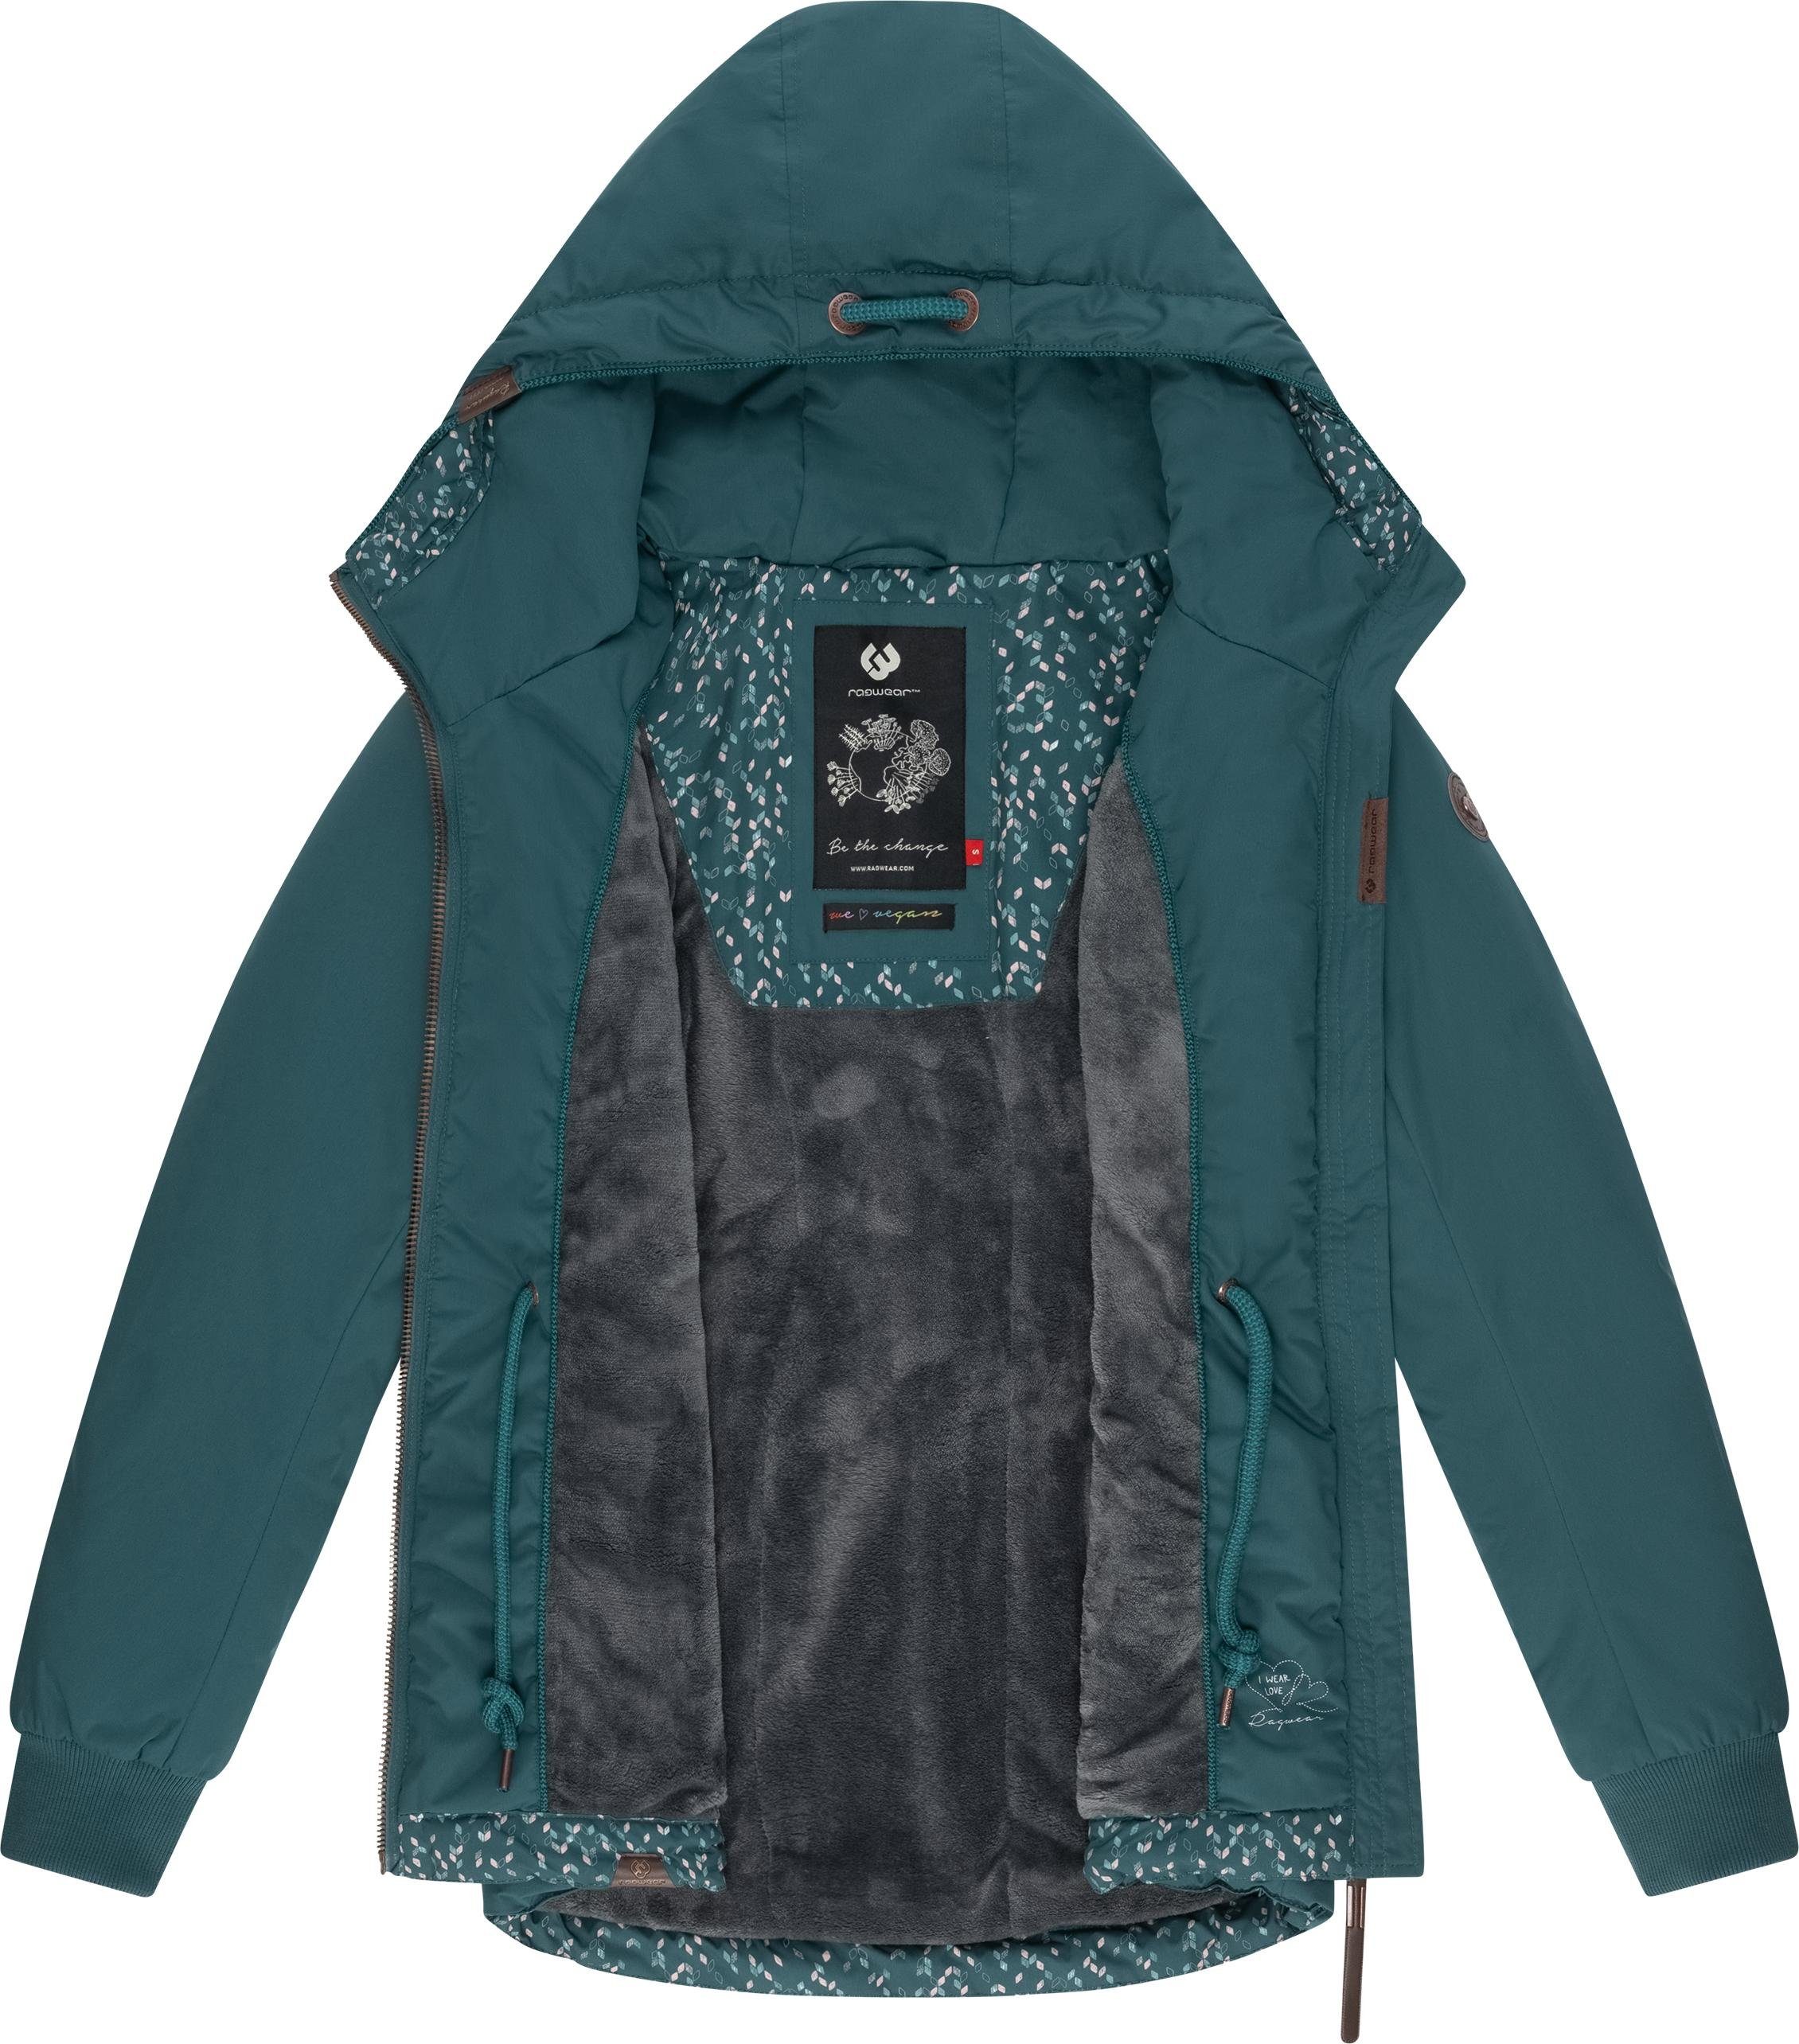 Winterjacke Ragwear Winter YM-Danka stylische mit Kapuze graugrün Outdoorjacke